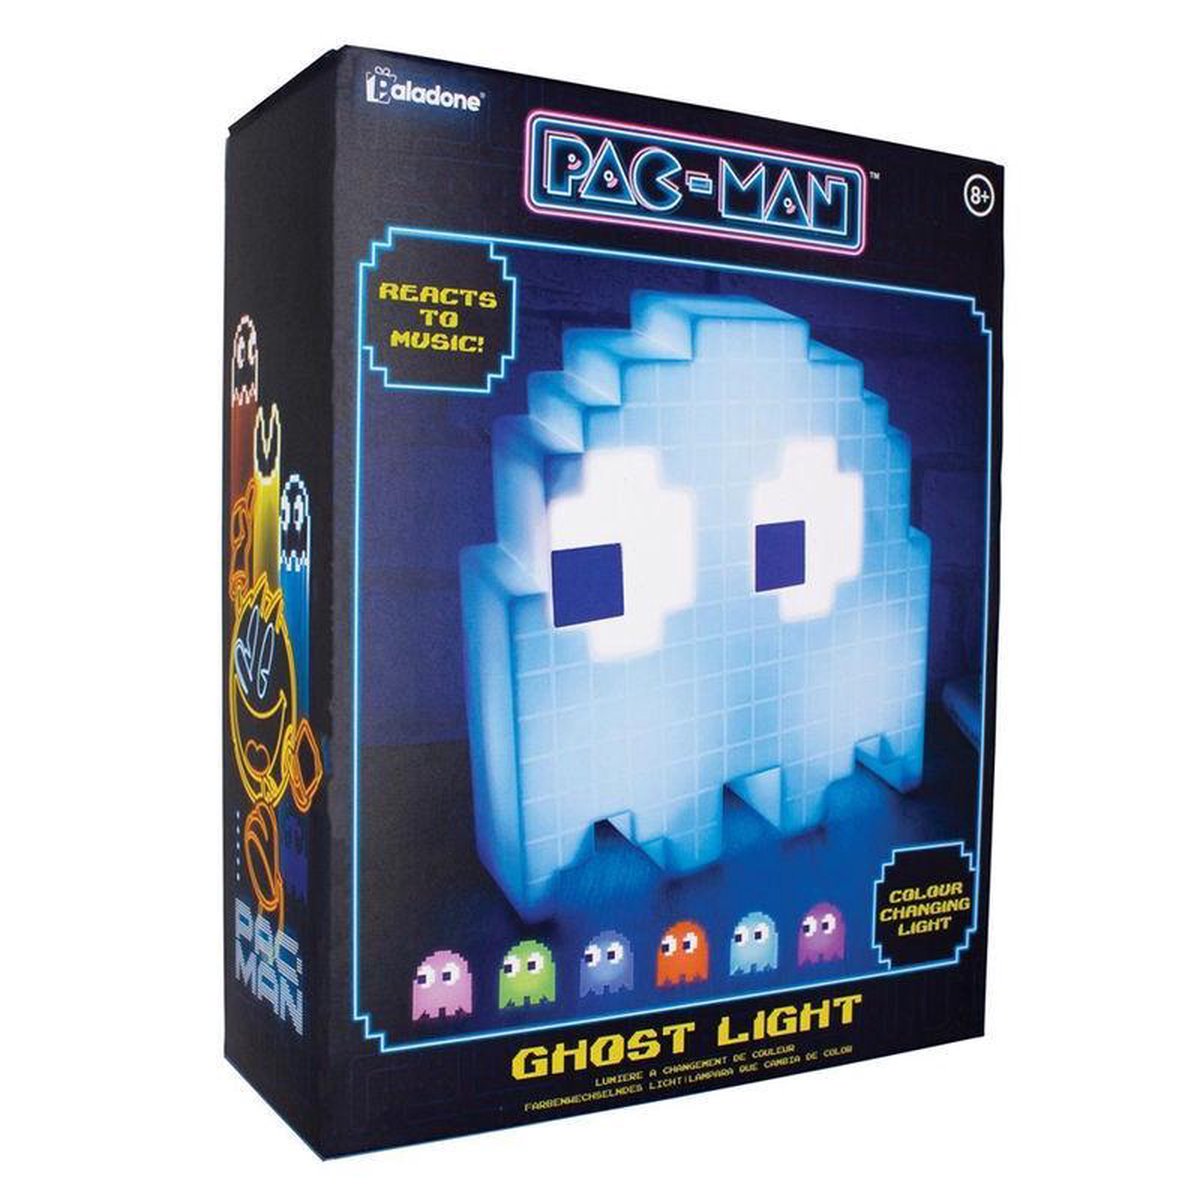 Pac-Man Ghost light Gamesellers.nl